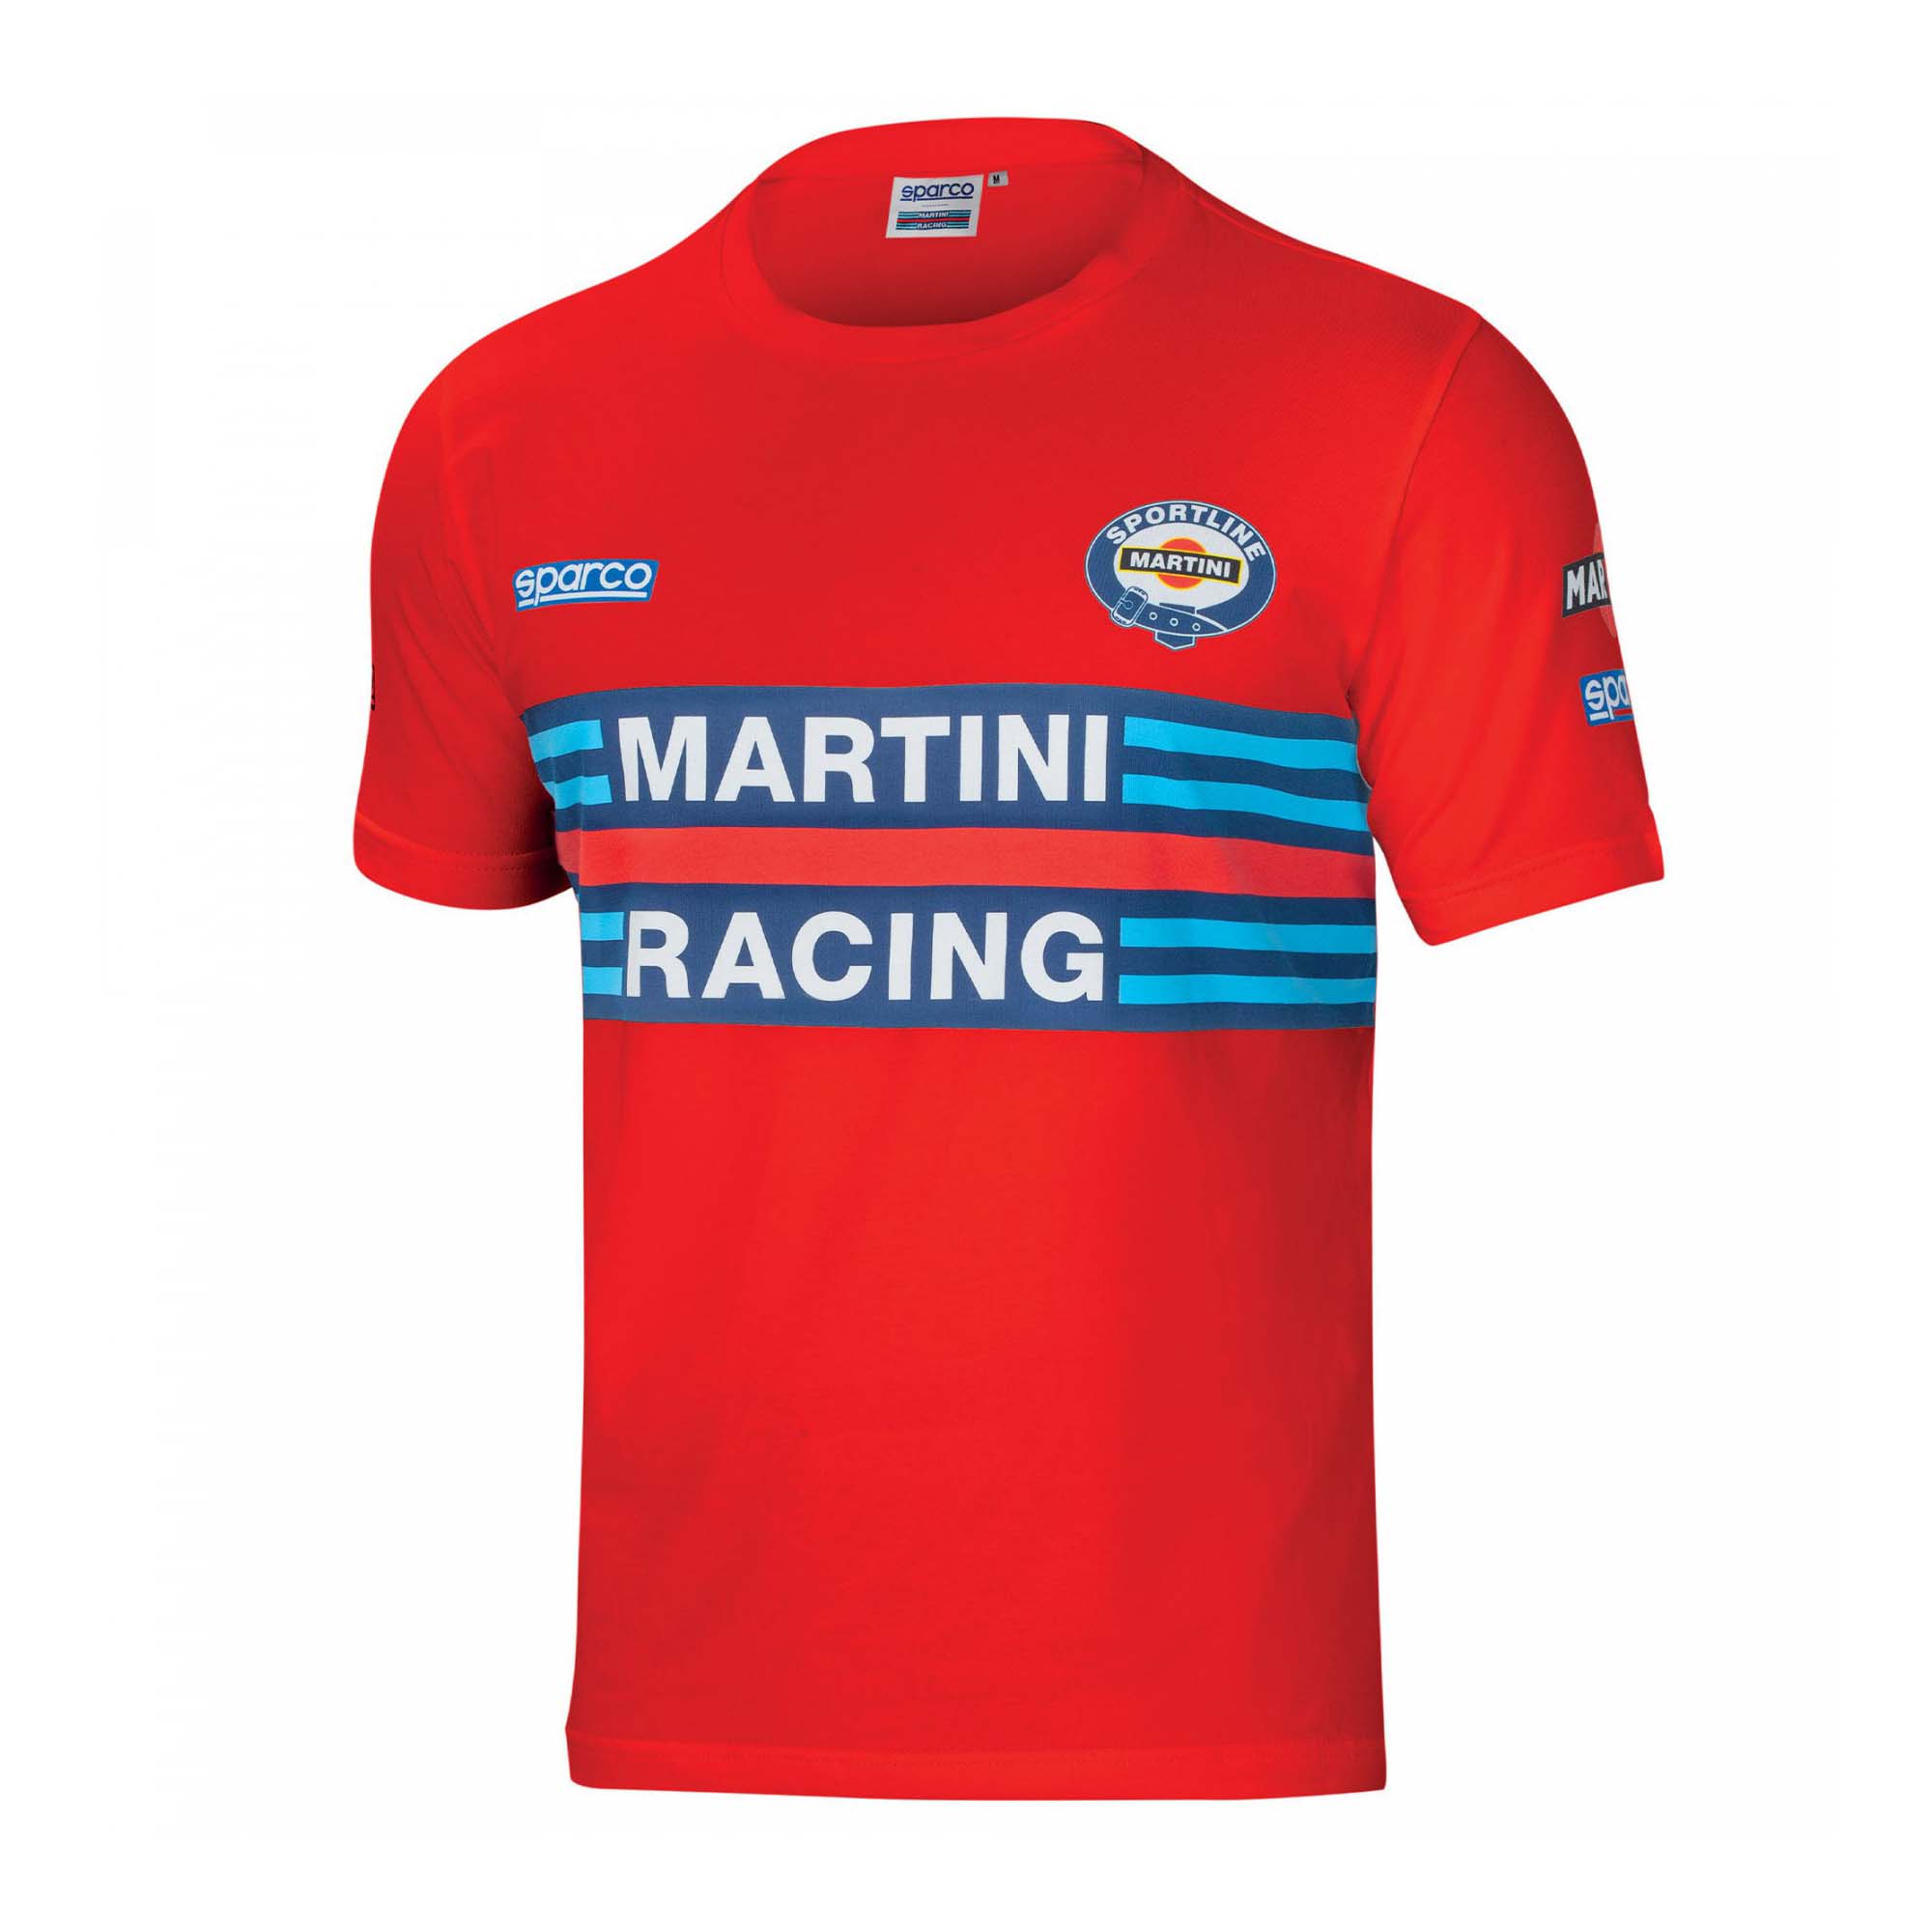 Sparco Martini Replica T-Shirt